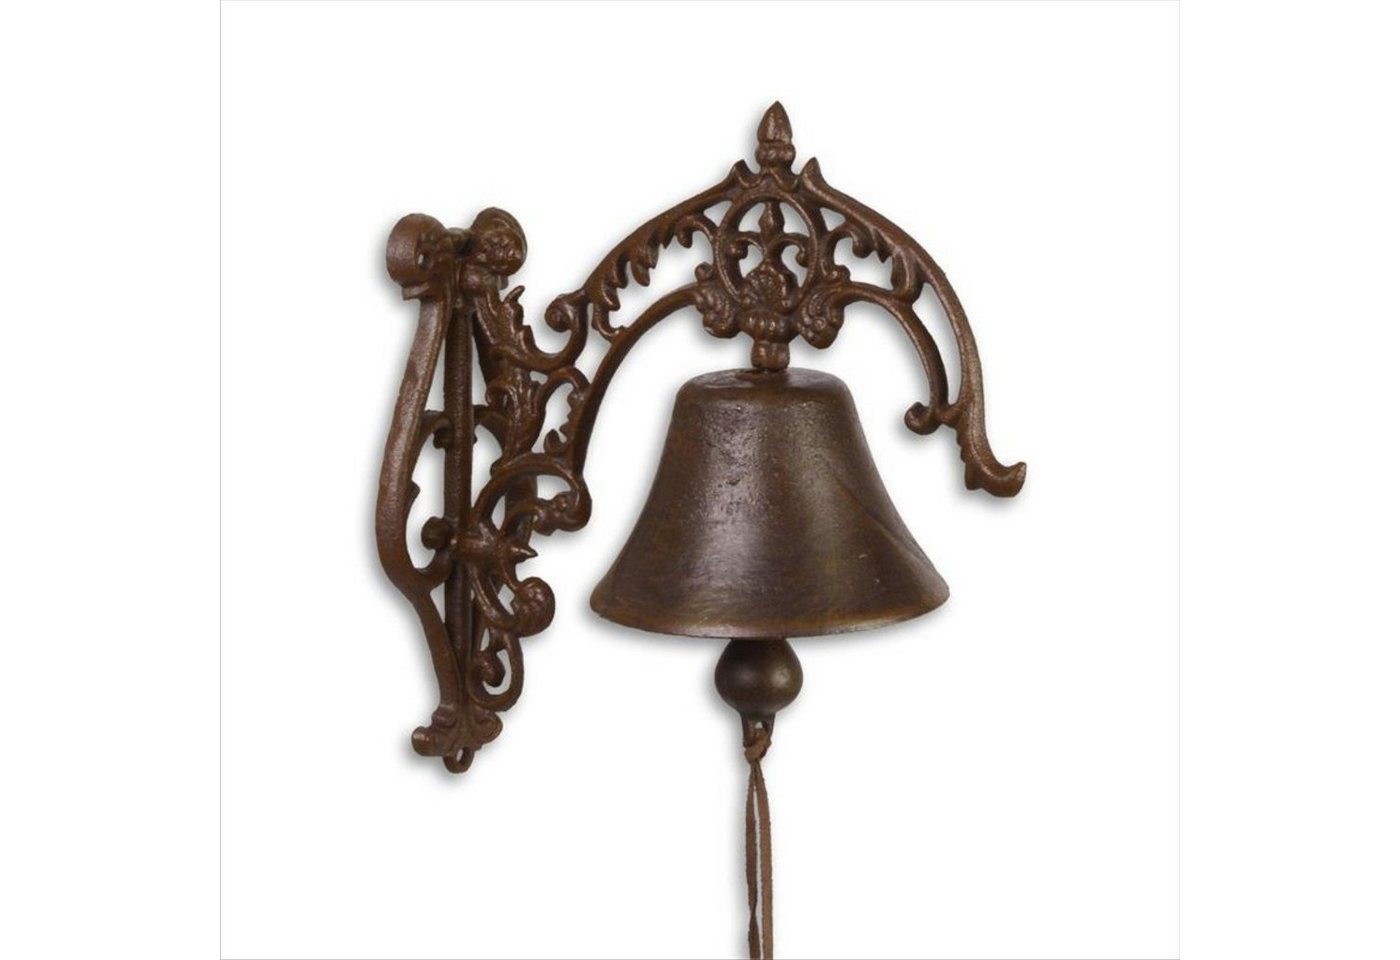 Moritz Gartenfigur Glocke mit Ornamenten groß, Gusseisen Türglocke Wandglocke Glocke Klingel Gong Antik Landhaus von Moritz